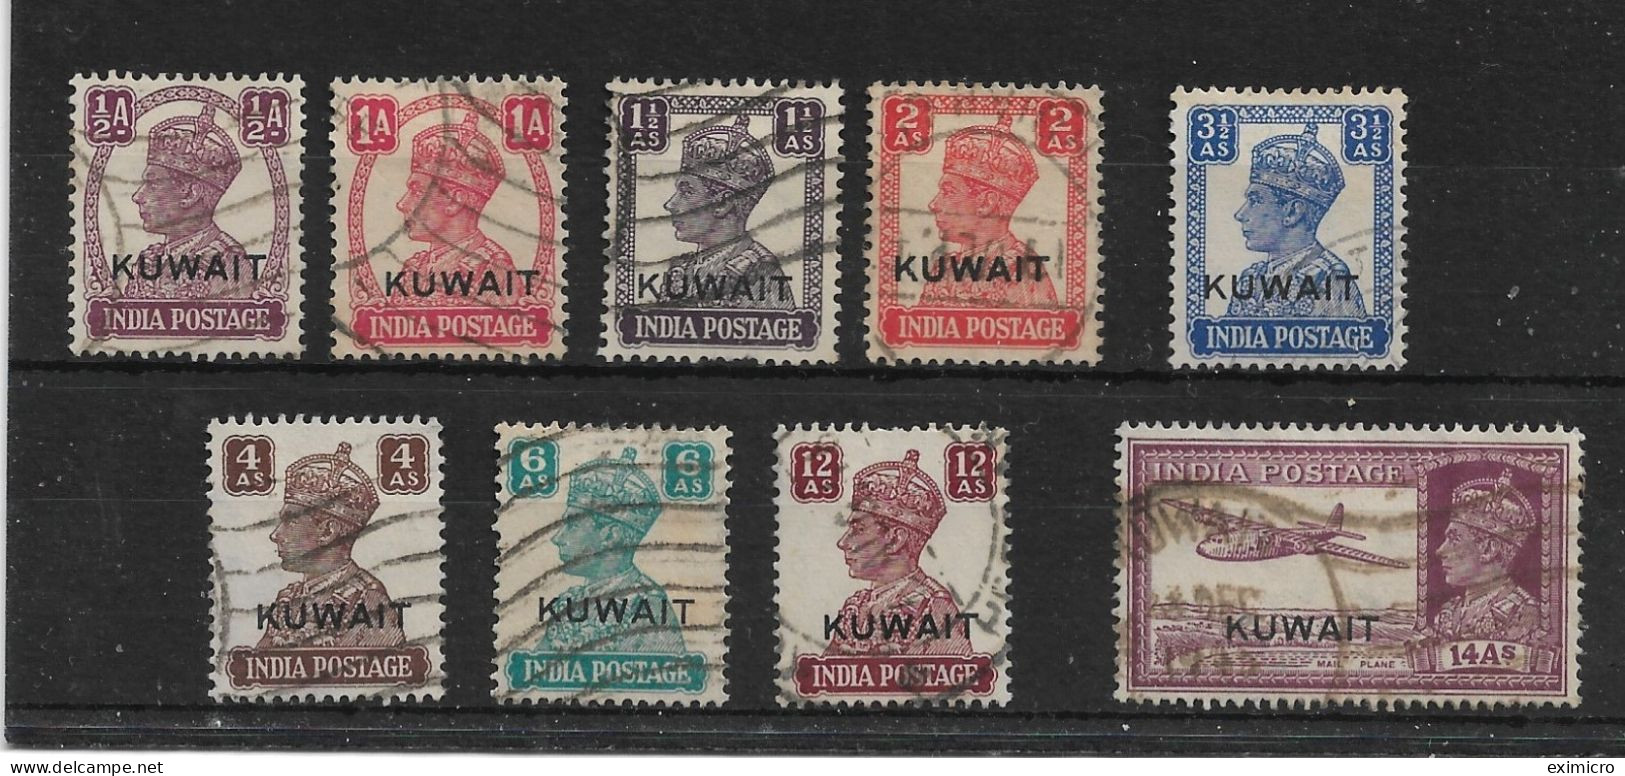 KUWAIT 1945 VALUES TO 14a SG 55,57,59,60,60a,62,63 FINE USED Cat £140+ - Koweït